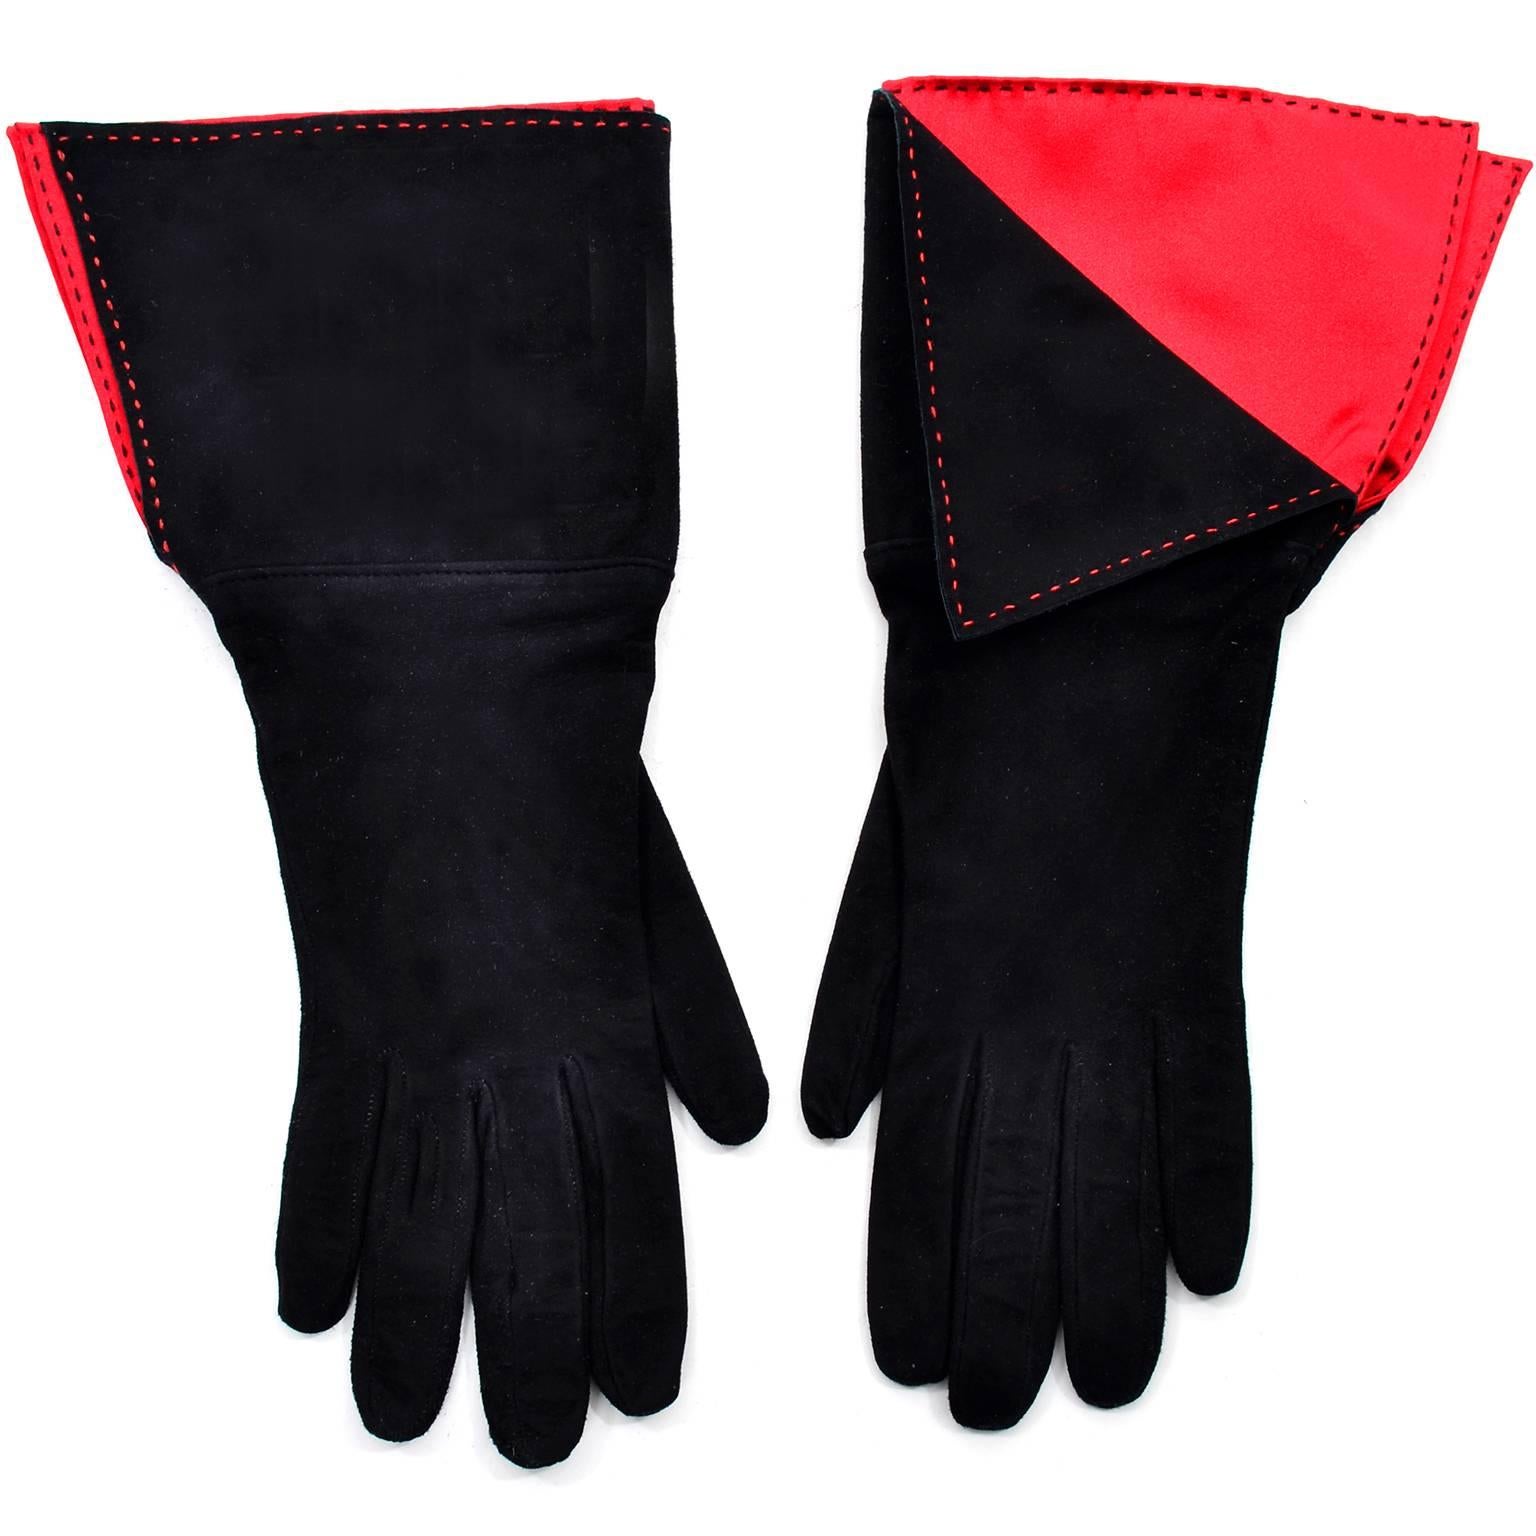 Black Paloma Picasso 3Pc Vintage Accessories Gauntlet Gloves Clutch Handbag Wrap Scarf